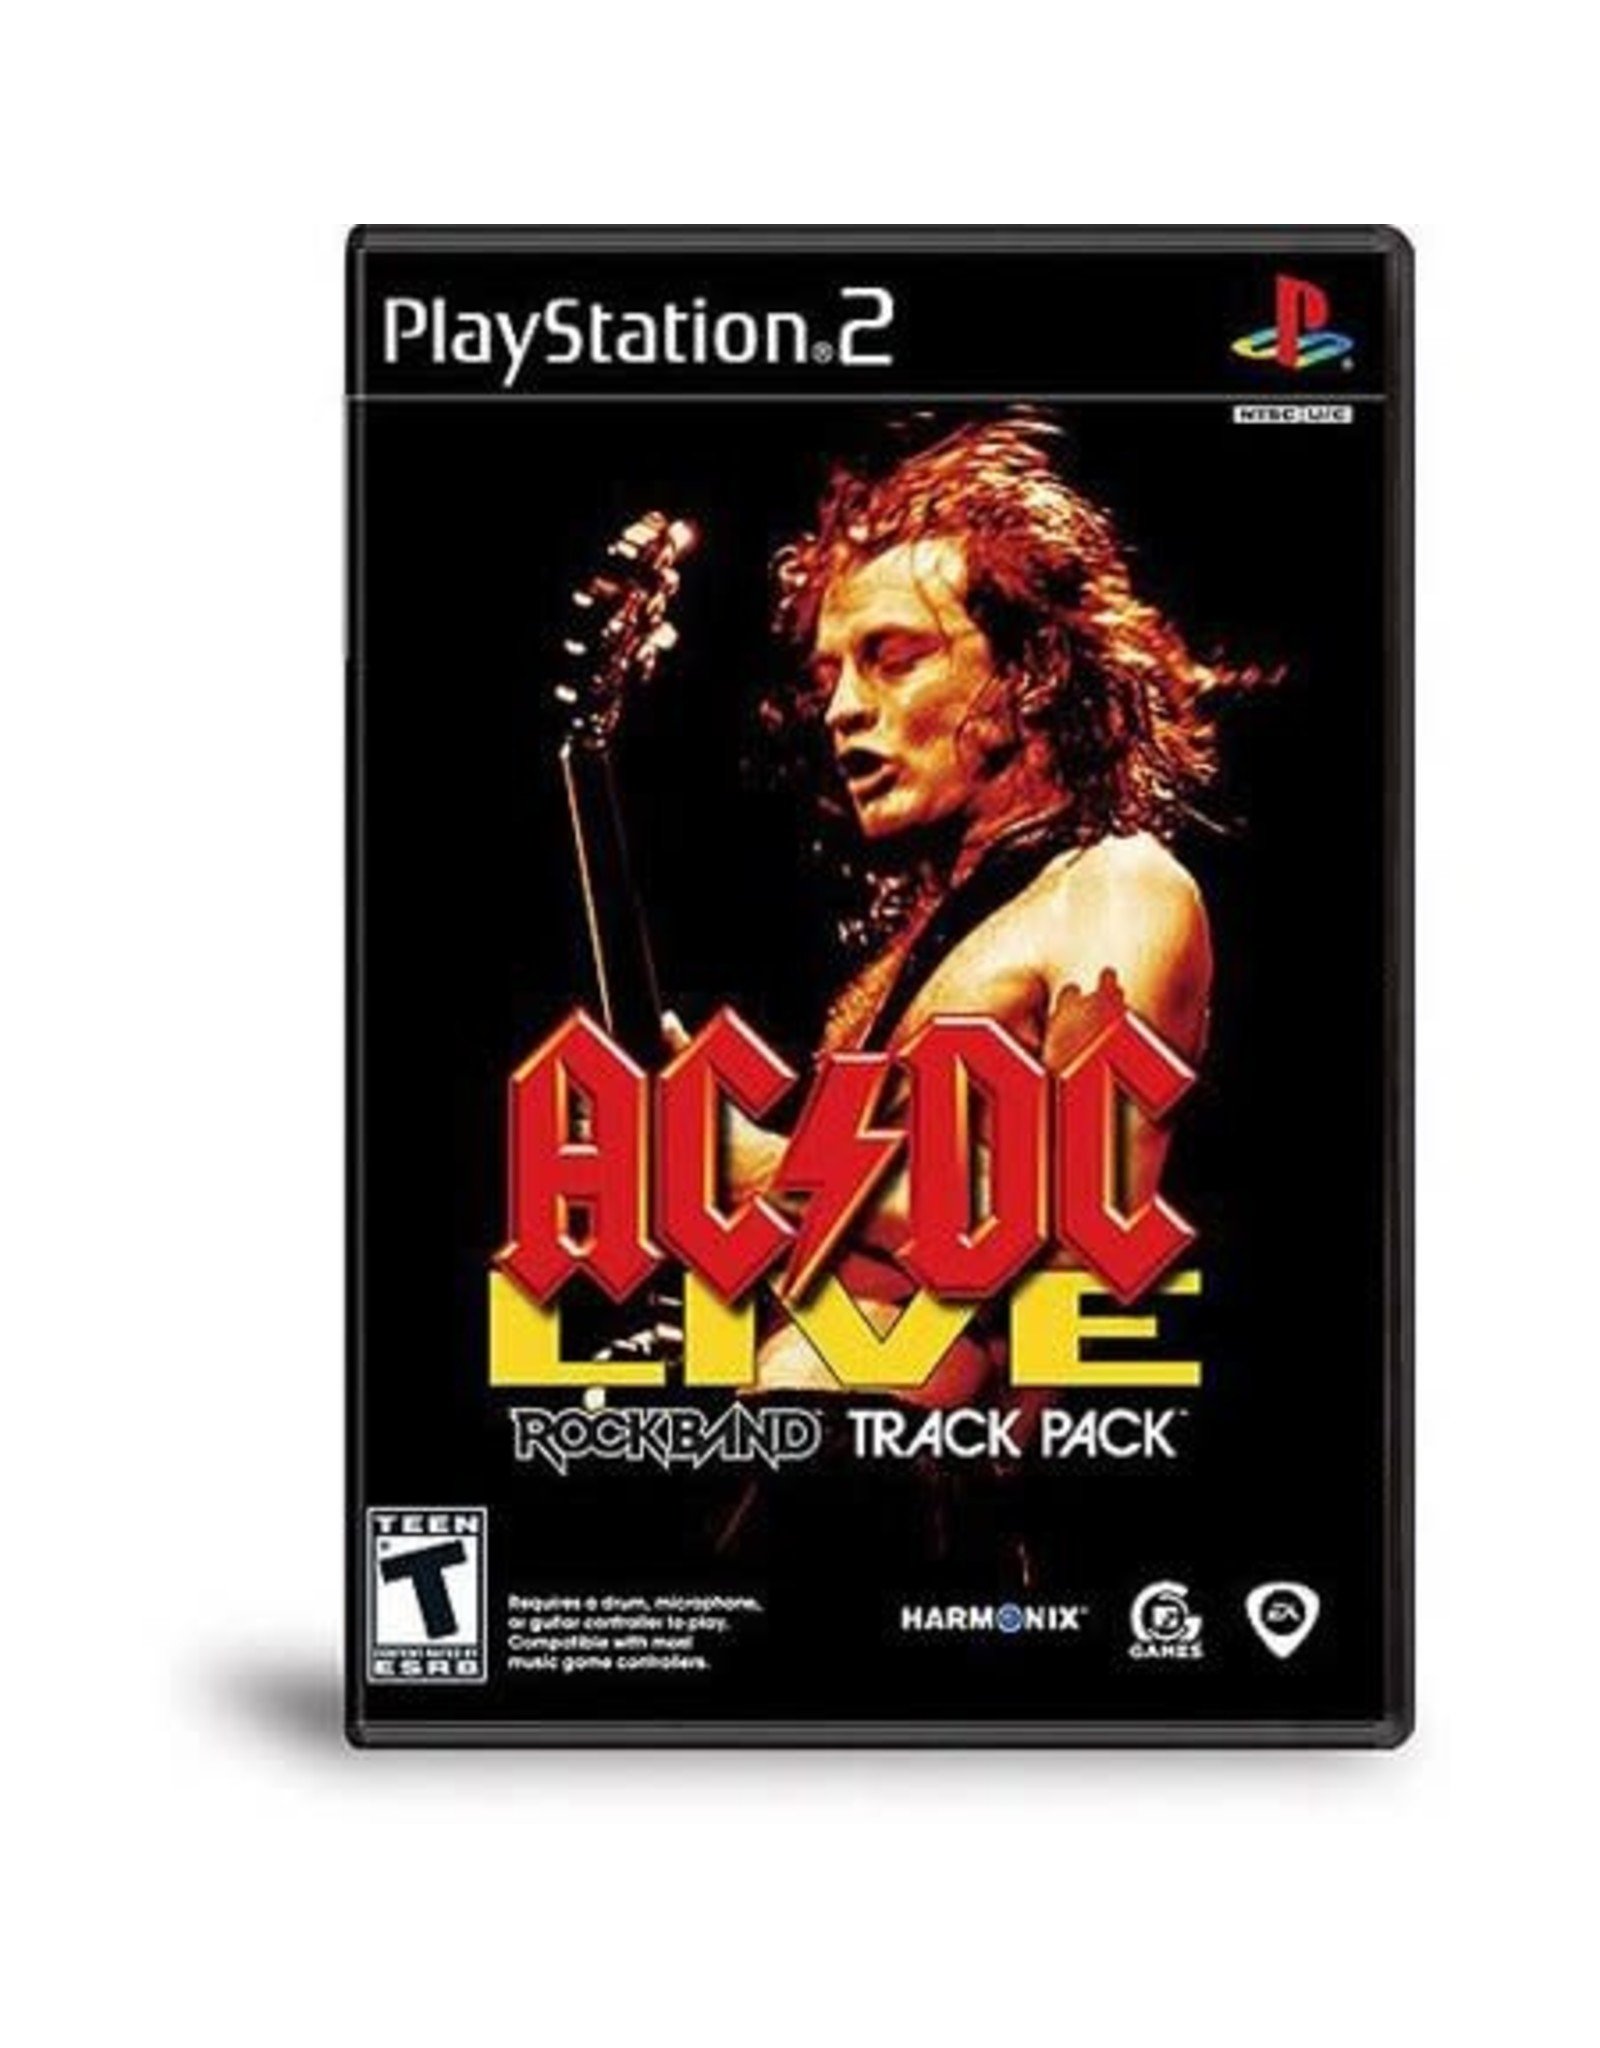 Playstation 2 AC/DC Live Rock Band Track Pack (CiB)